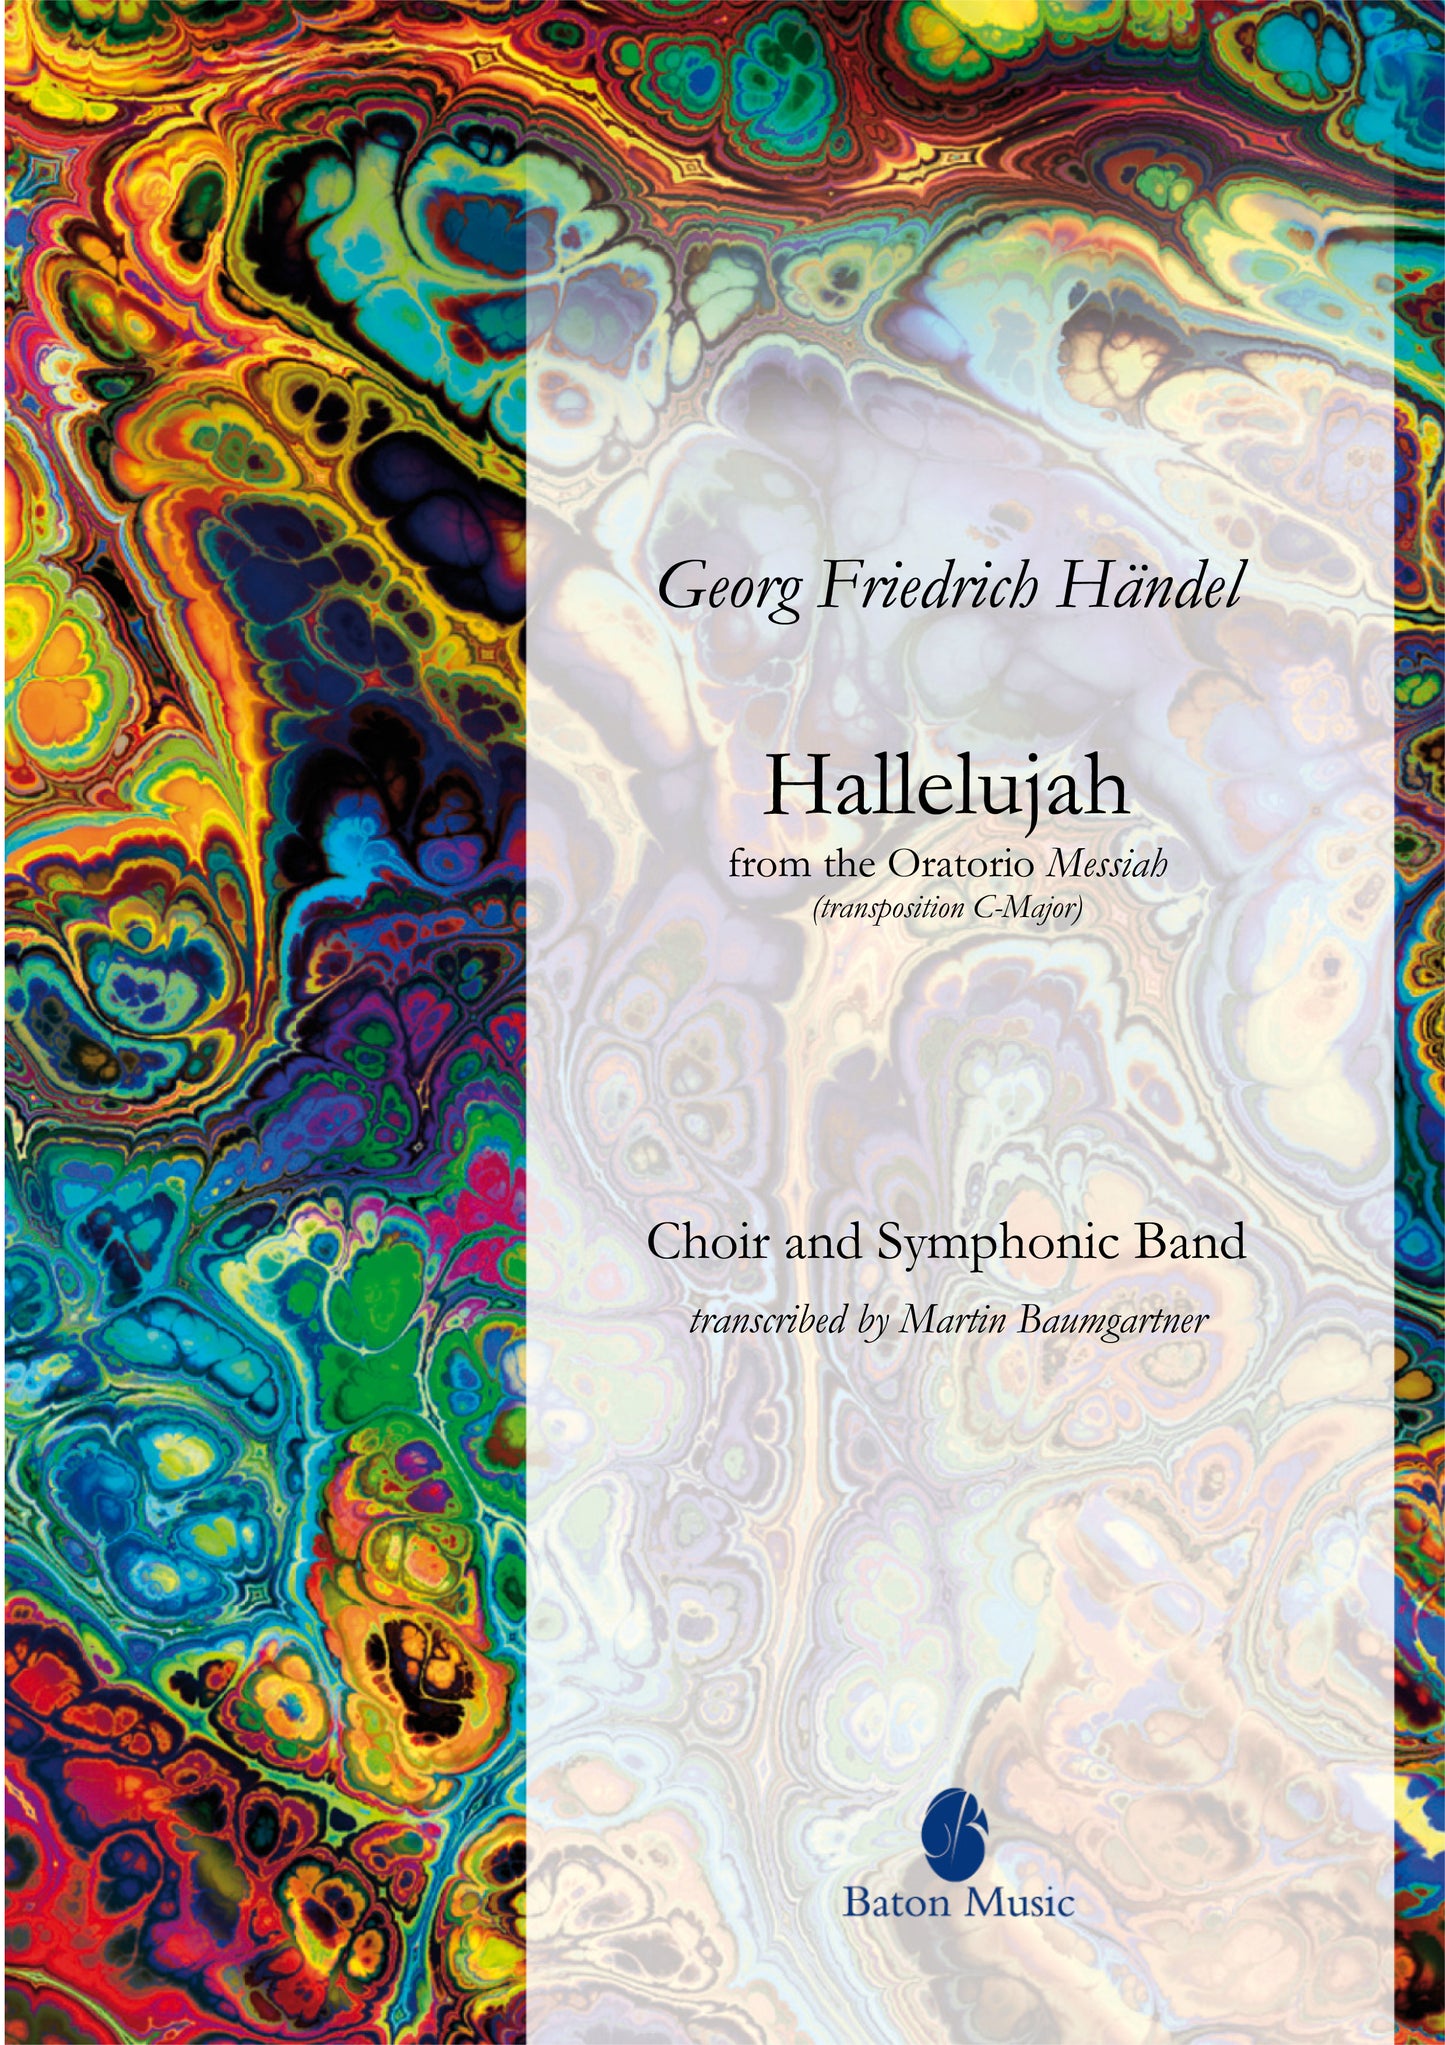 Hallelujah from 'Messiah' (C-Major, transposed key) - G. F. Handel